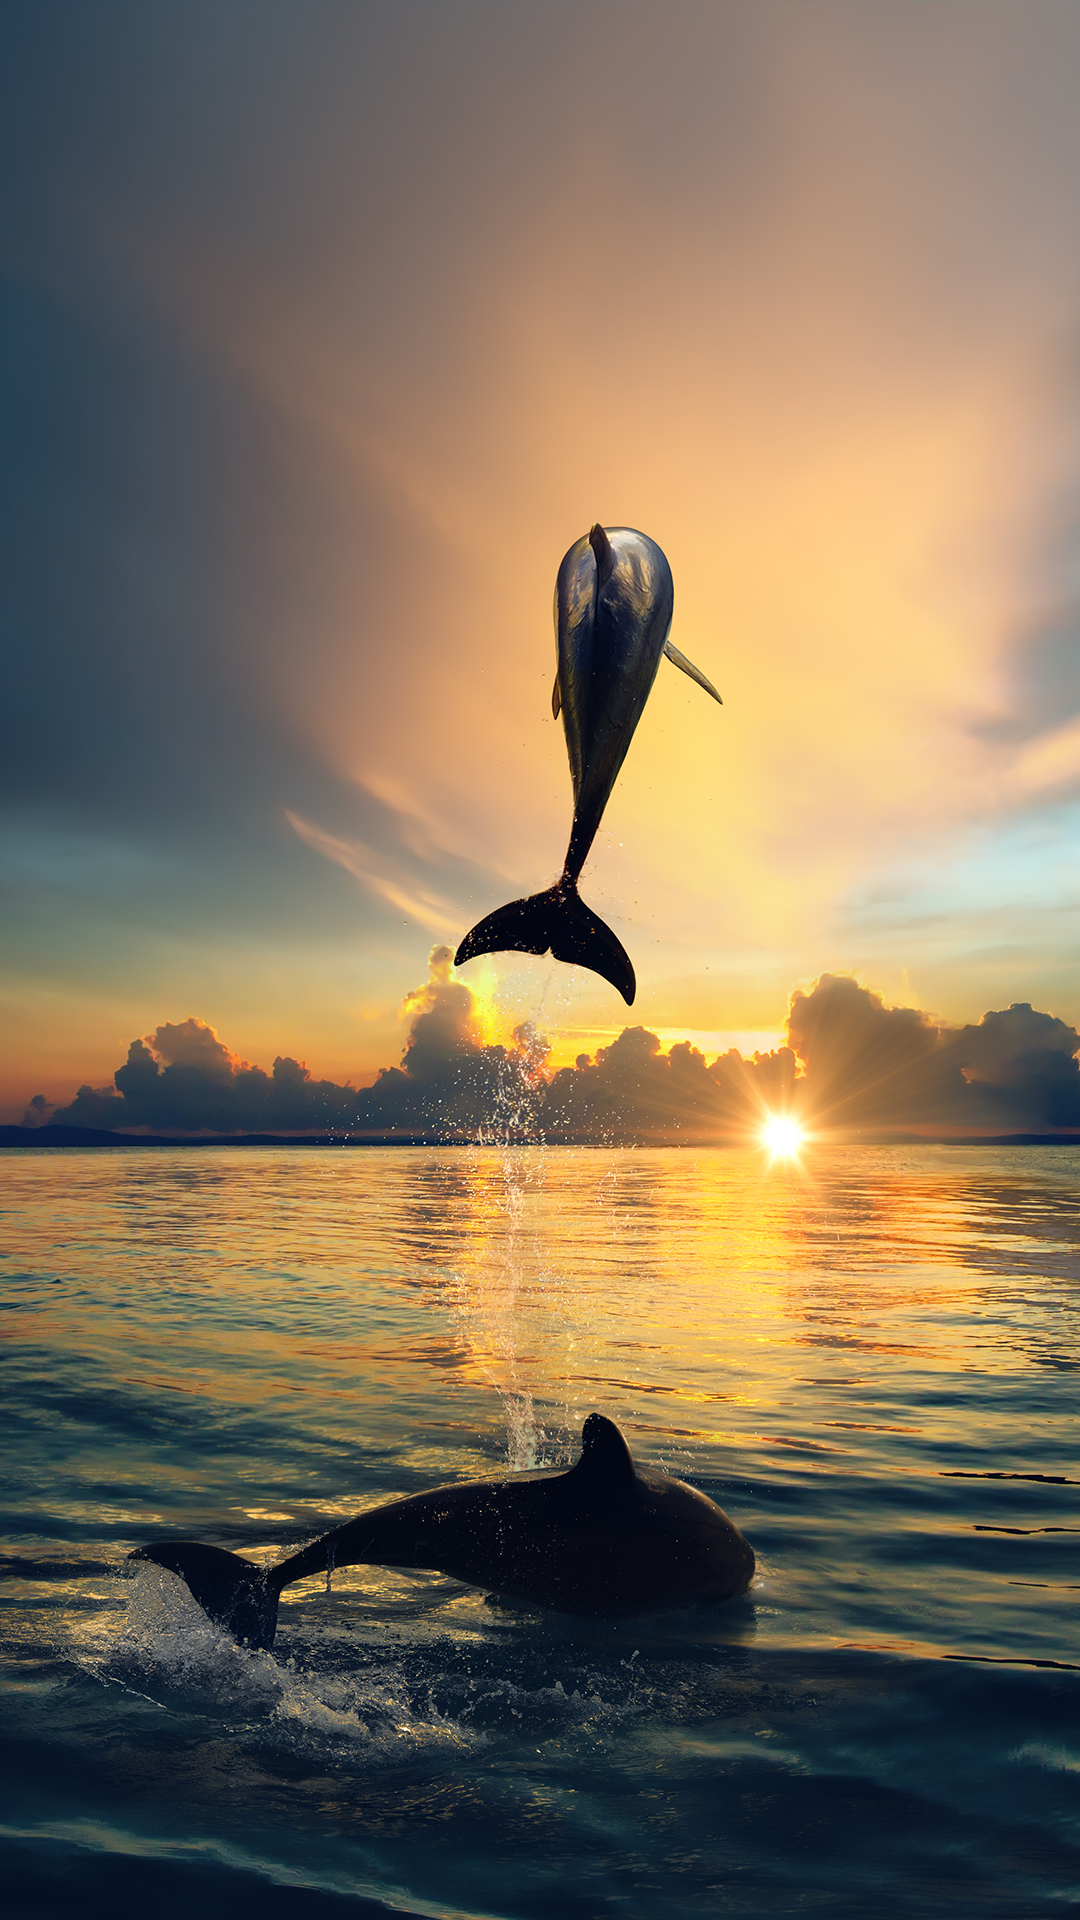 fond d'écran iphone dauphin,dauphin,grand dauphin,mammifère marin,grand dauphin commun,l'eau